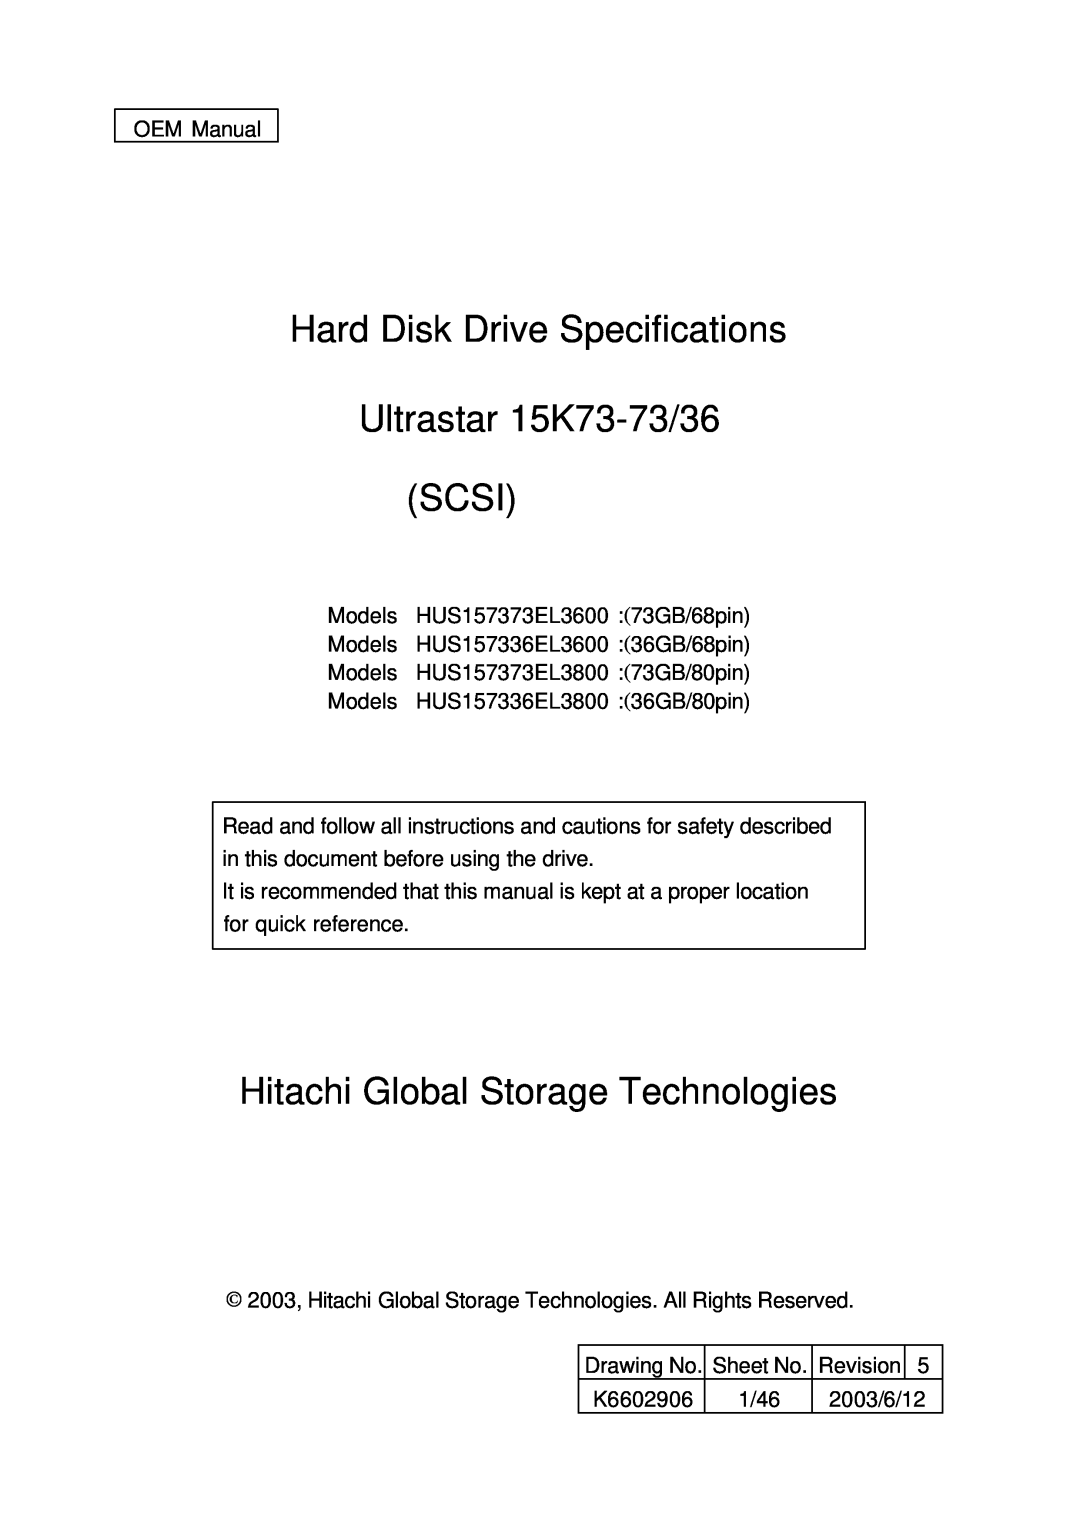 Hitachi HUS157336EL3600, HUS157373EL3800 specifications Hard Disk Drive Specifications Ultrastar 15K73-73/36 SCSI 